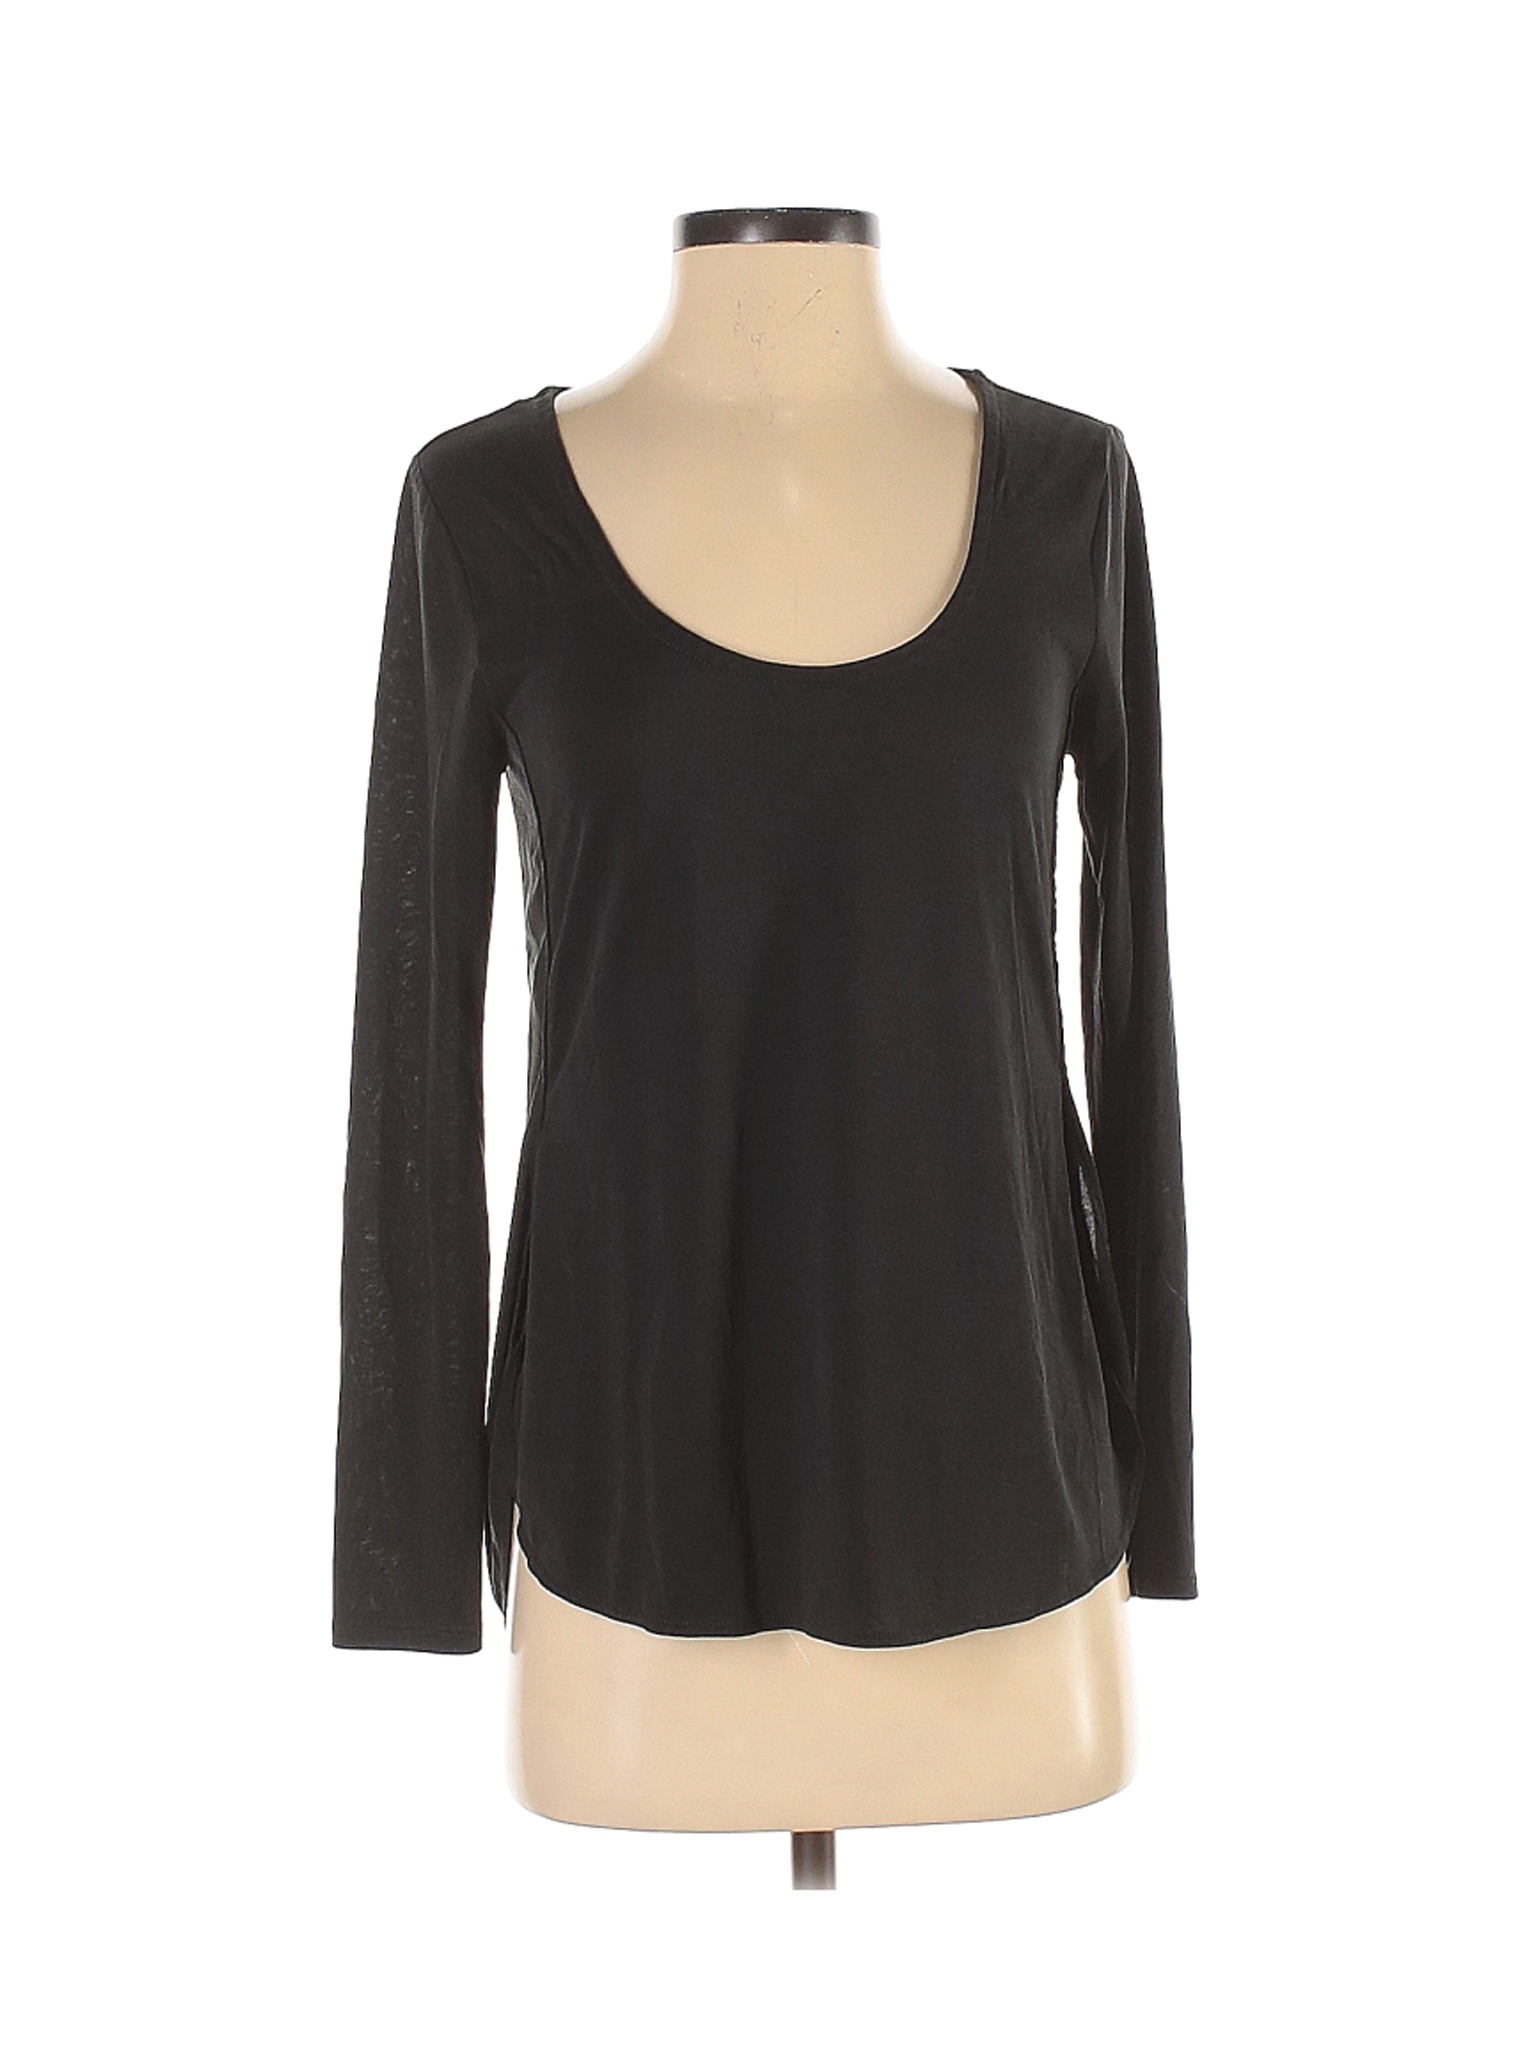 Old Navy Women Black Long Sleeve T-Shirt XS | eBay